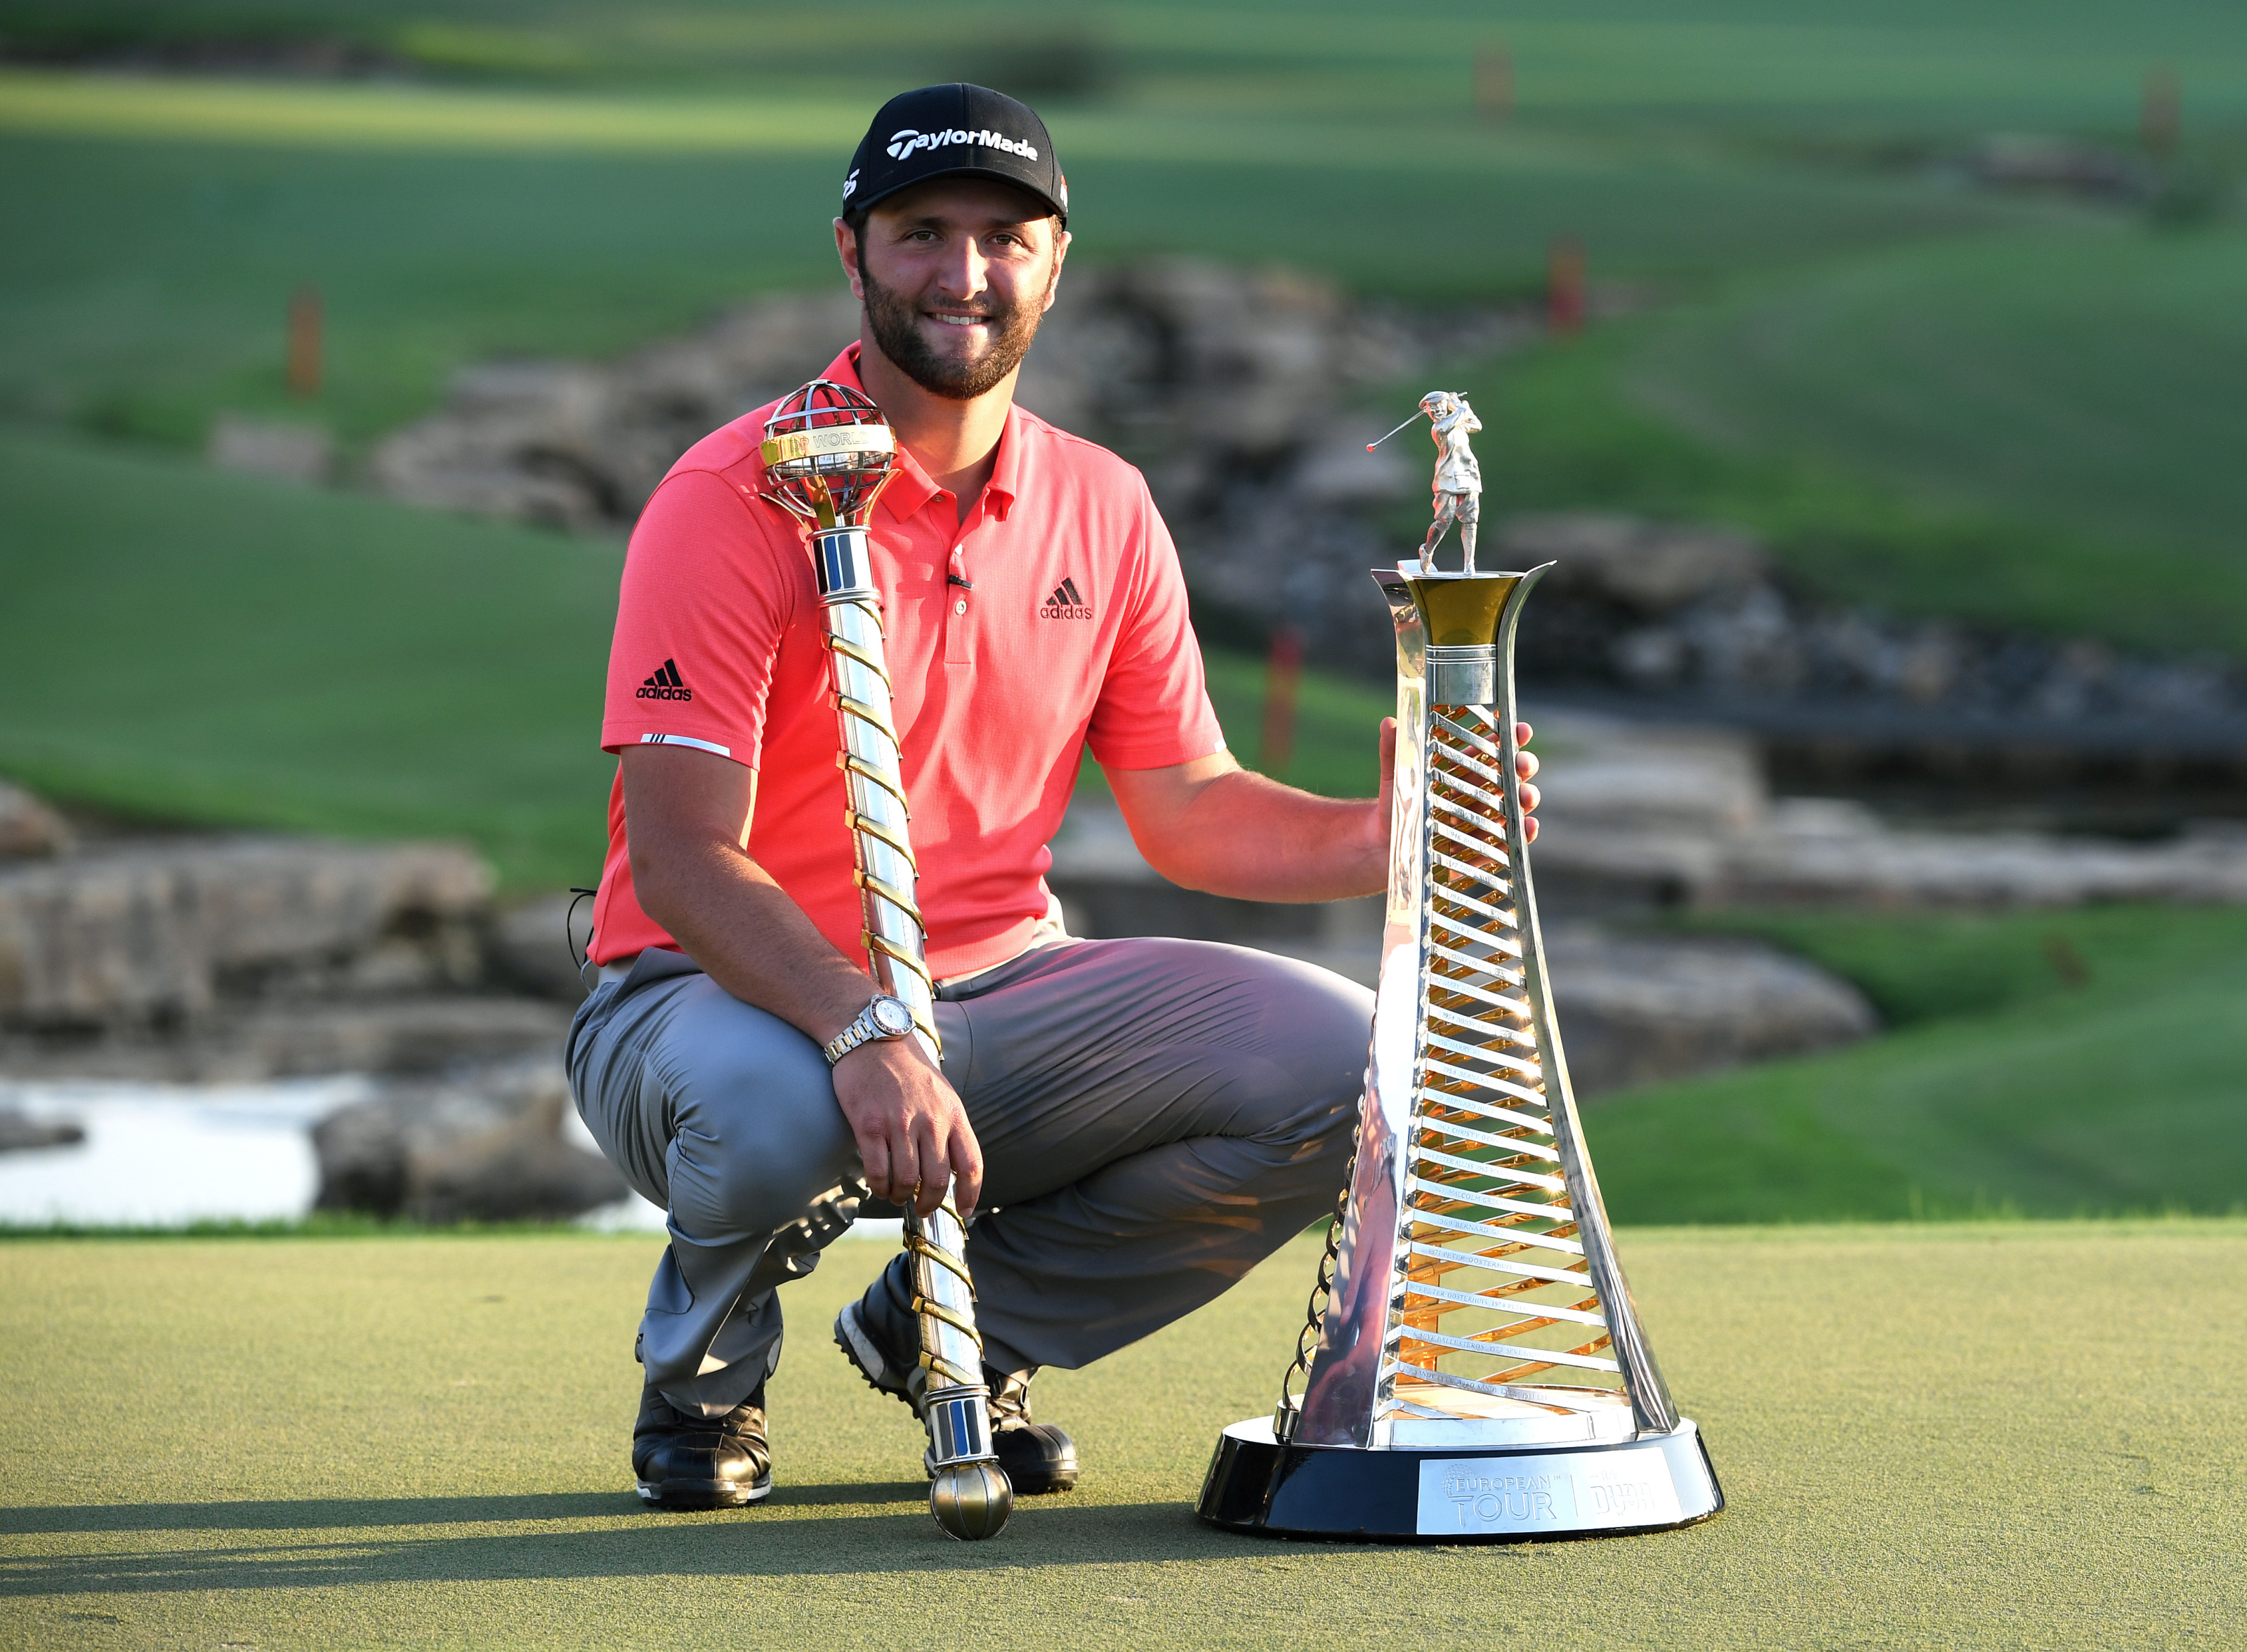 Race to Dubai prize money breakdown: How much will Jon Rahm and co earn?, Golf, Sport